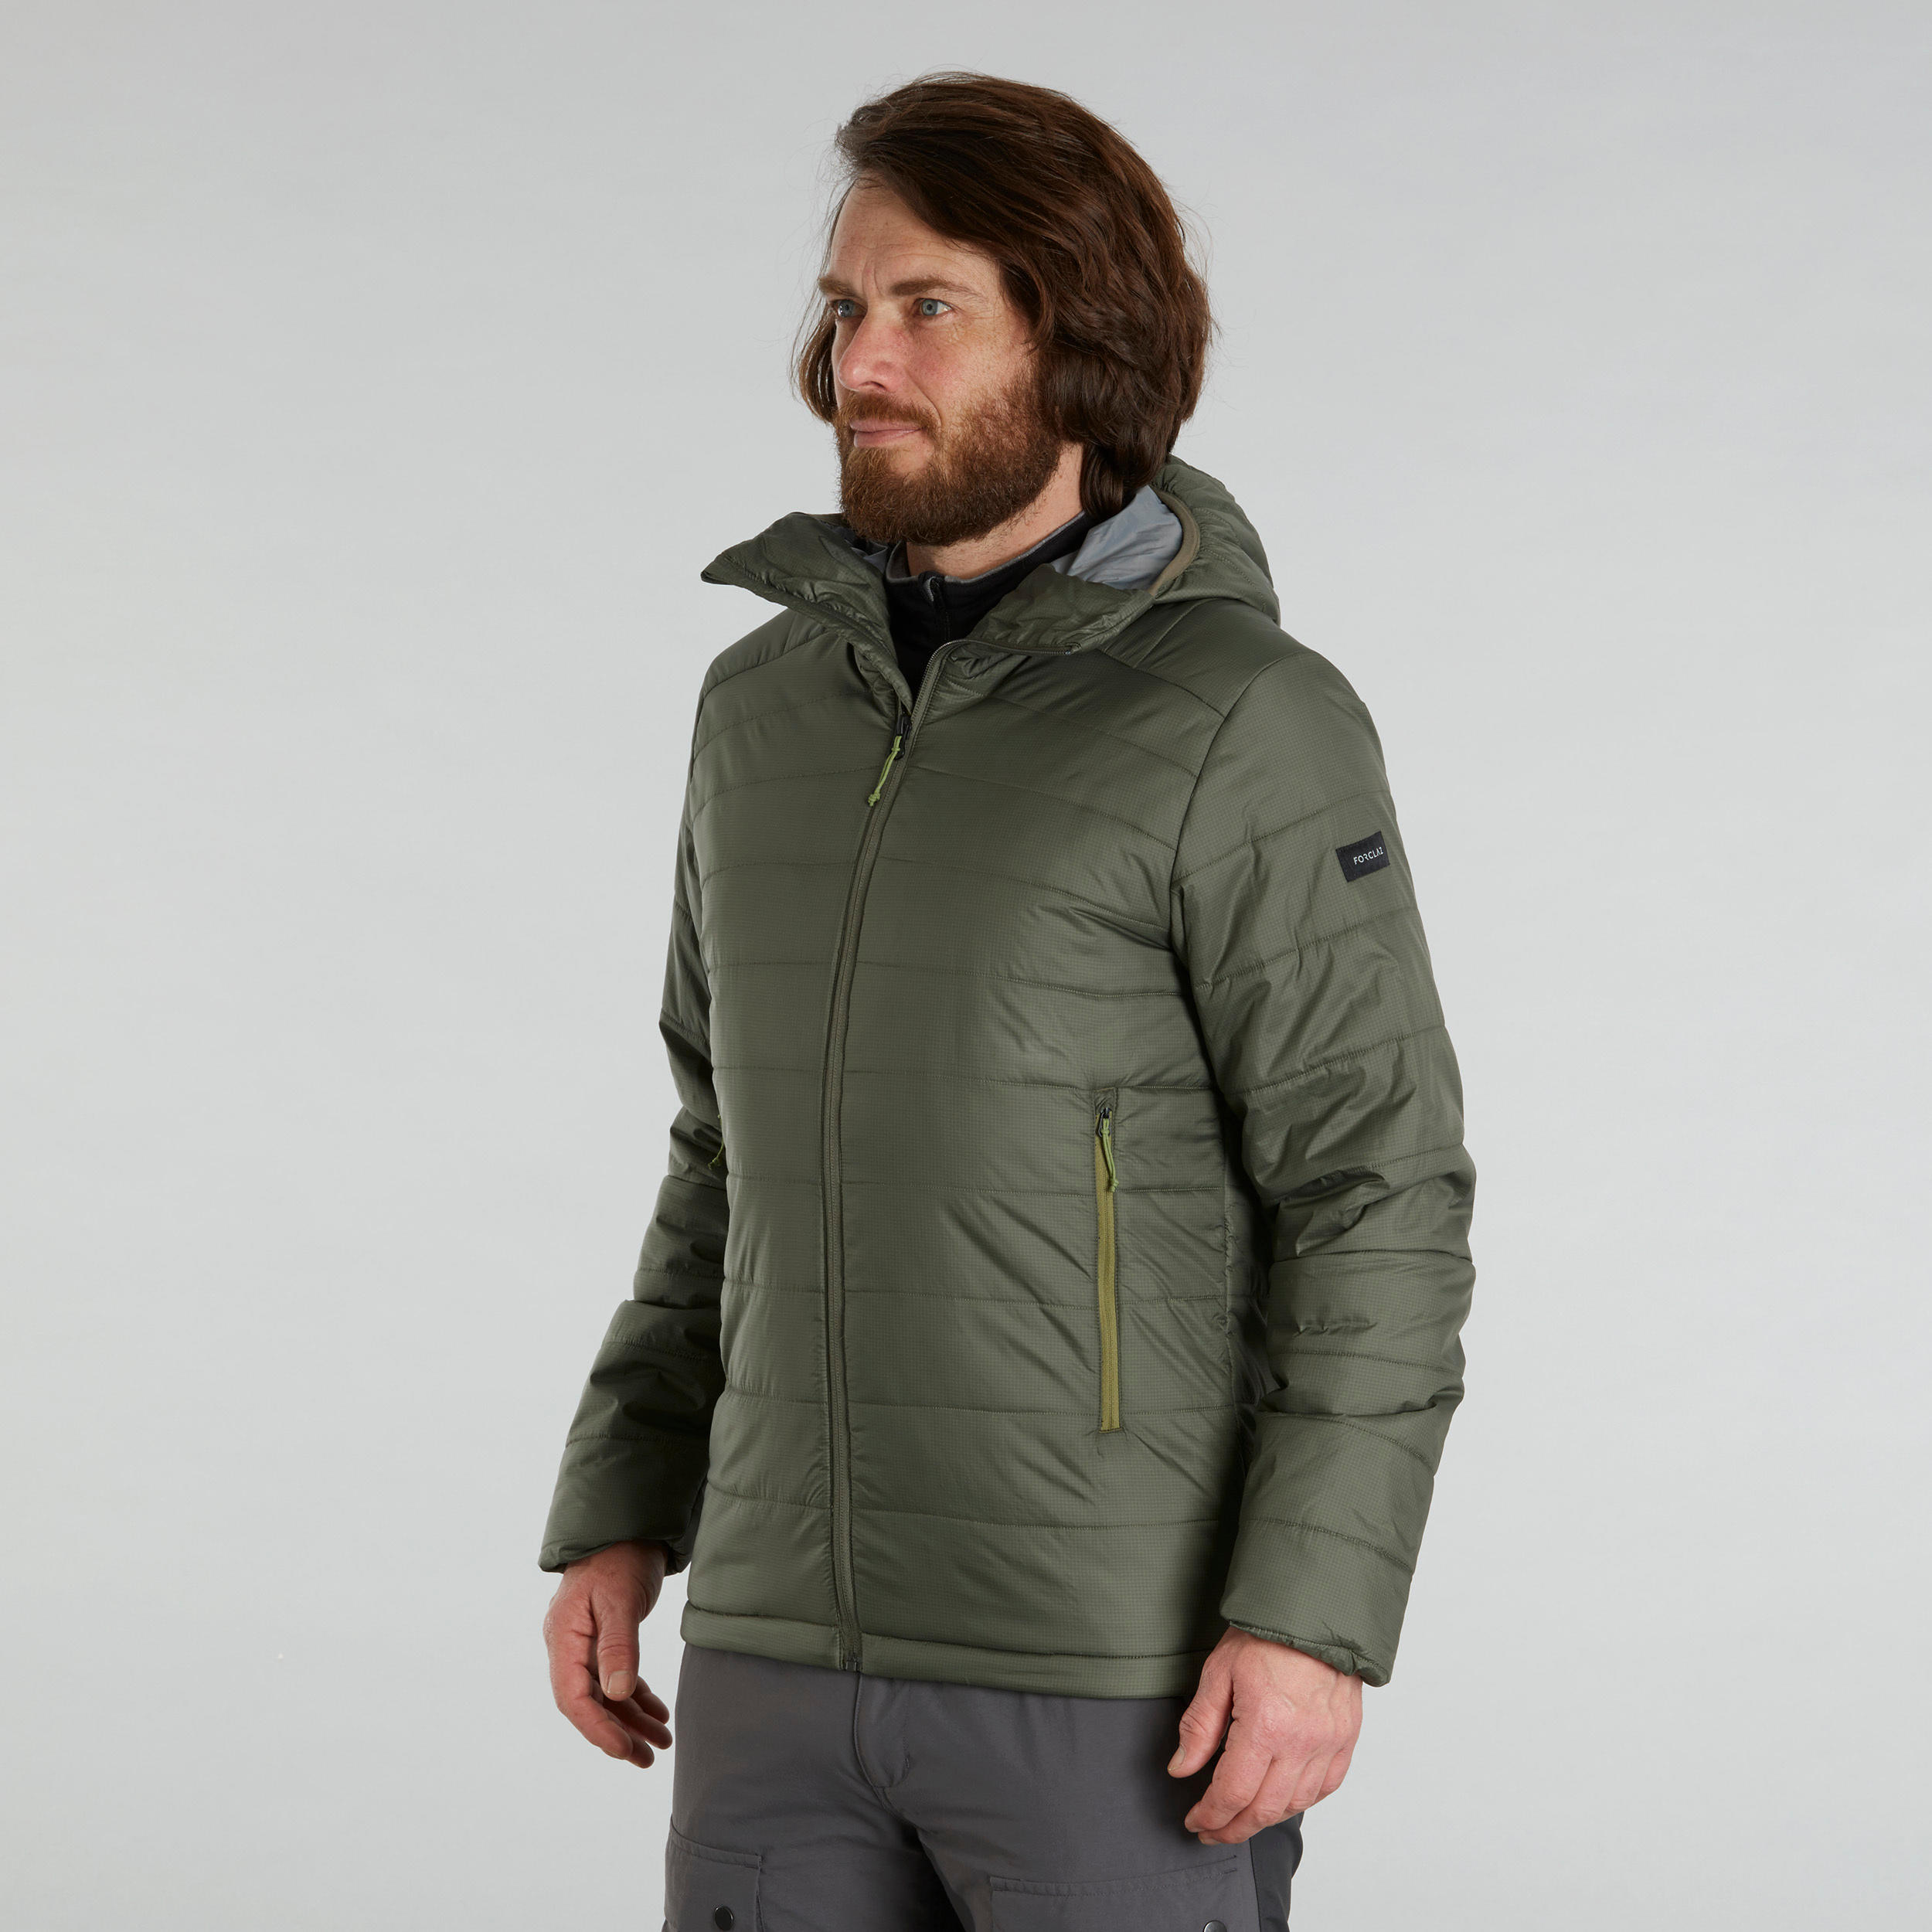 Men’s trekking padded jacket - MT100 hooded -5°C - 2XL By FORCLAZ | Decathlon